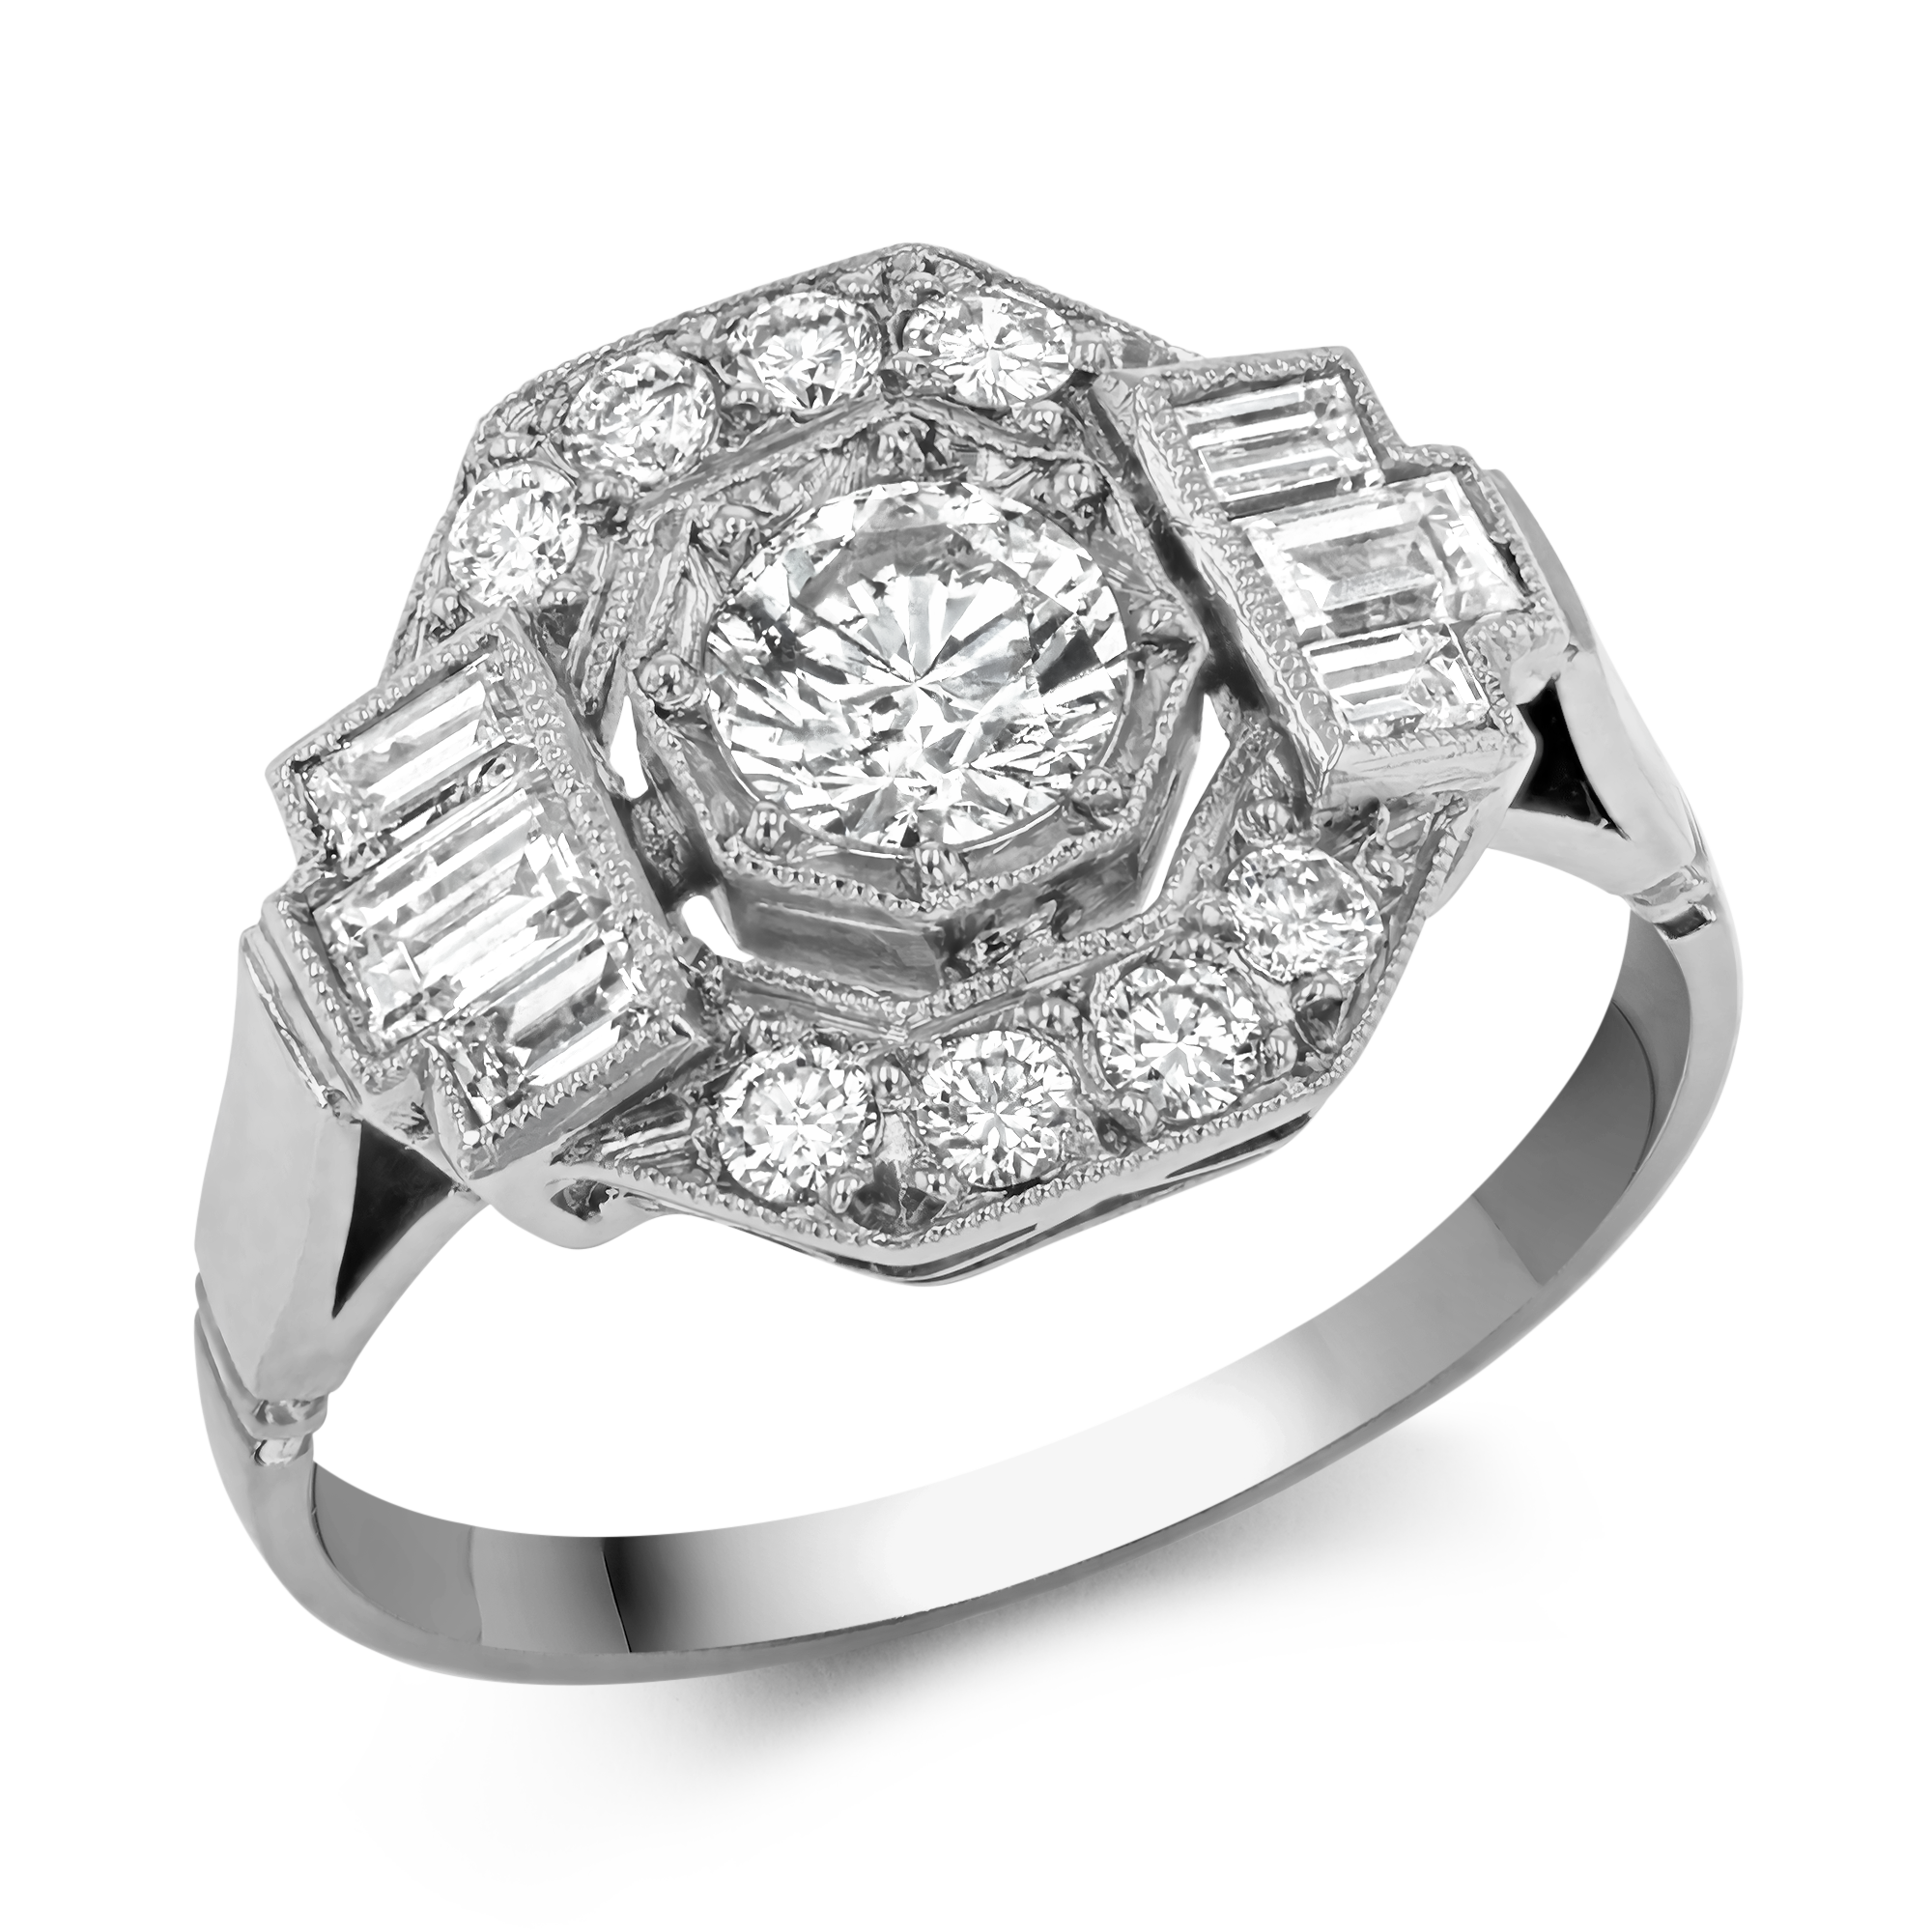 Art Deco Inspired Octagonal Diamond Ring Round & Baguette Cut, Millegrain Set_1